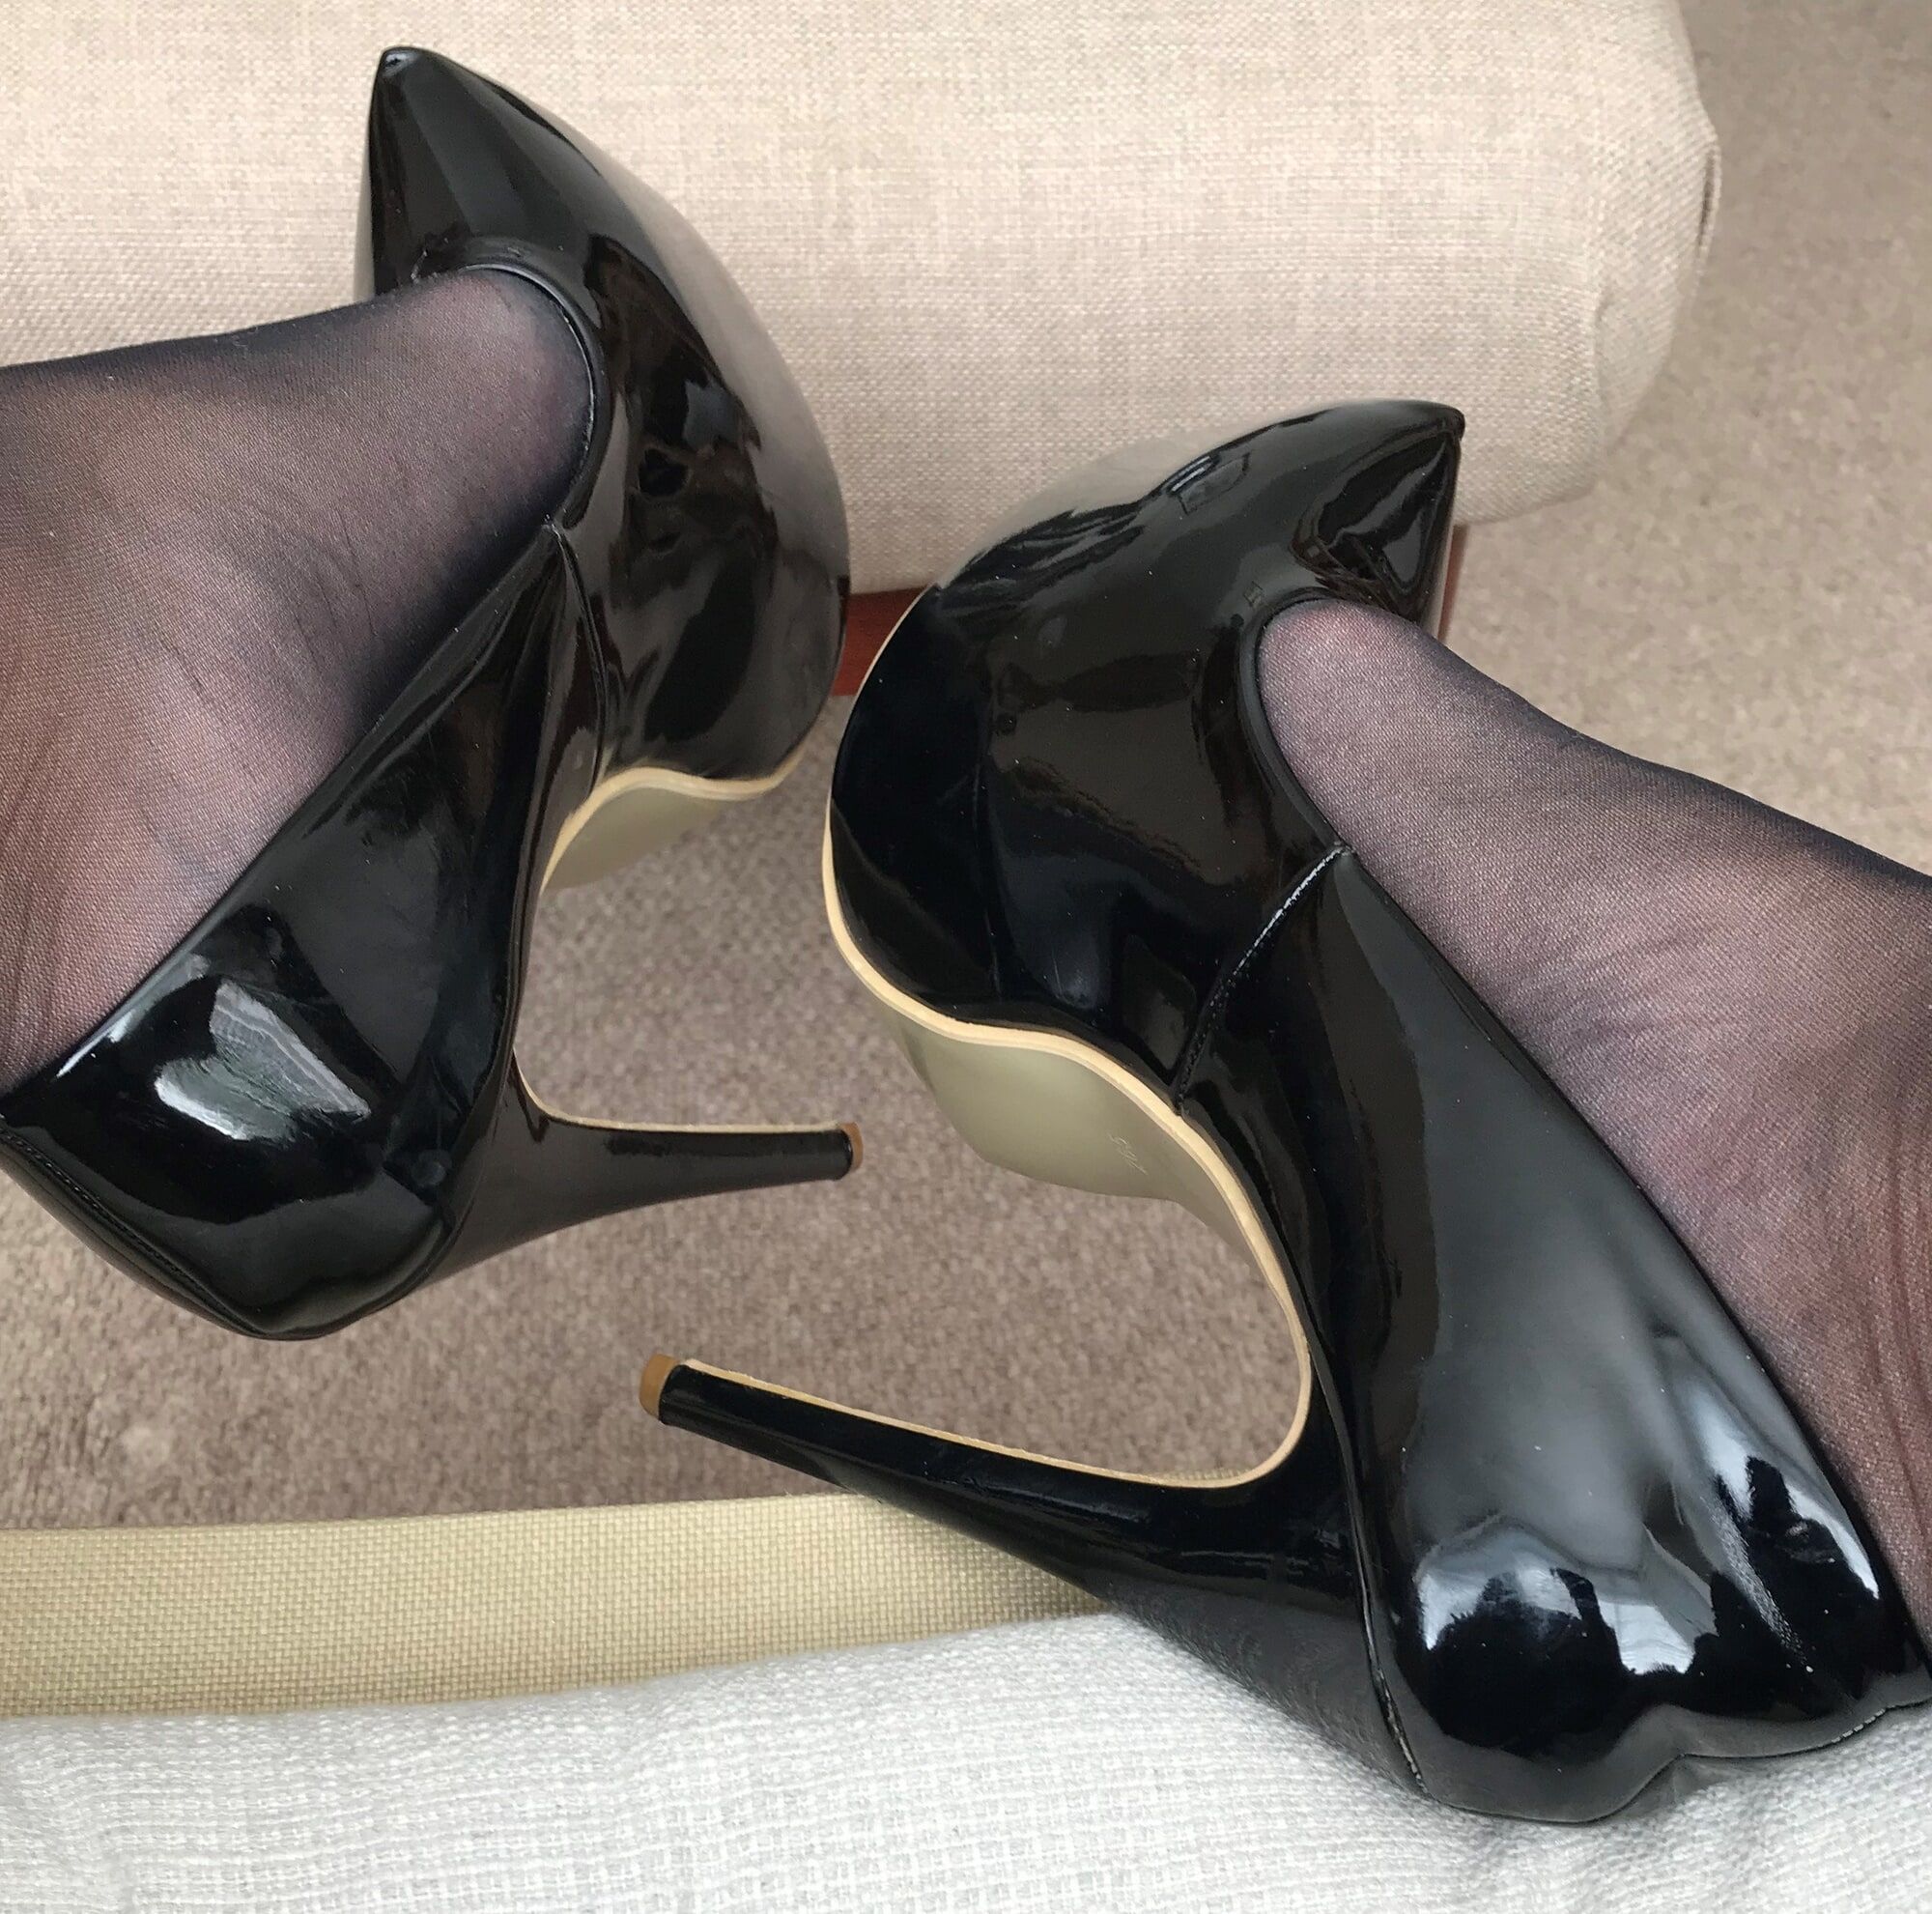 black tights & heels close-up #12